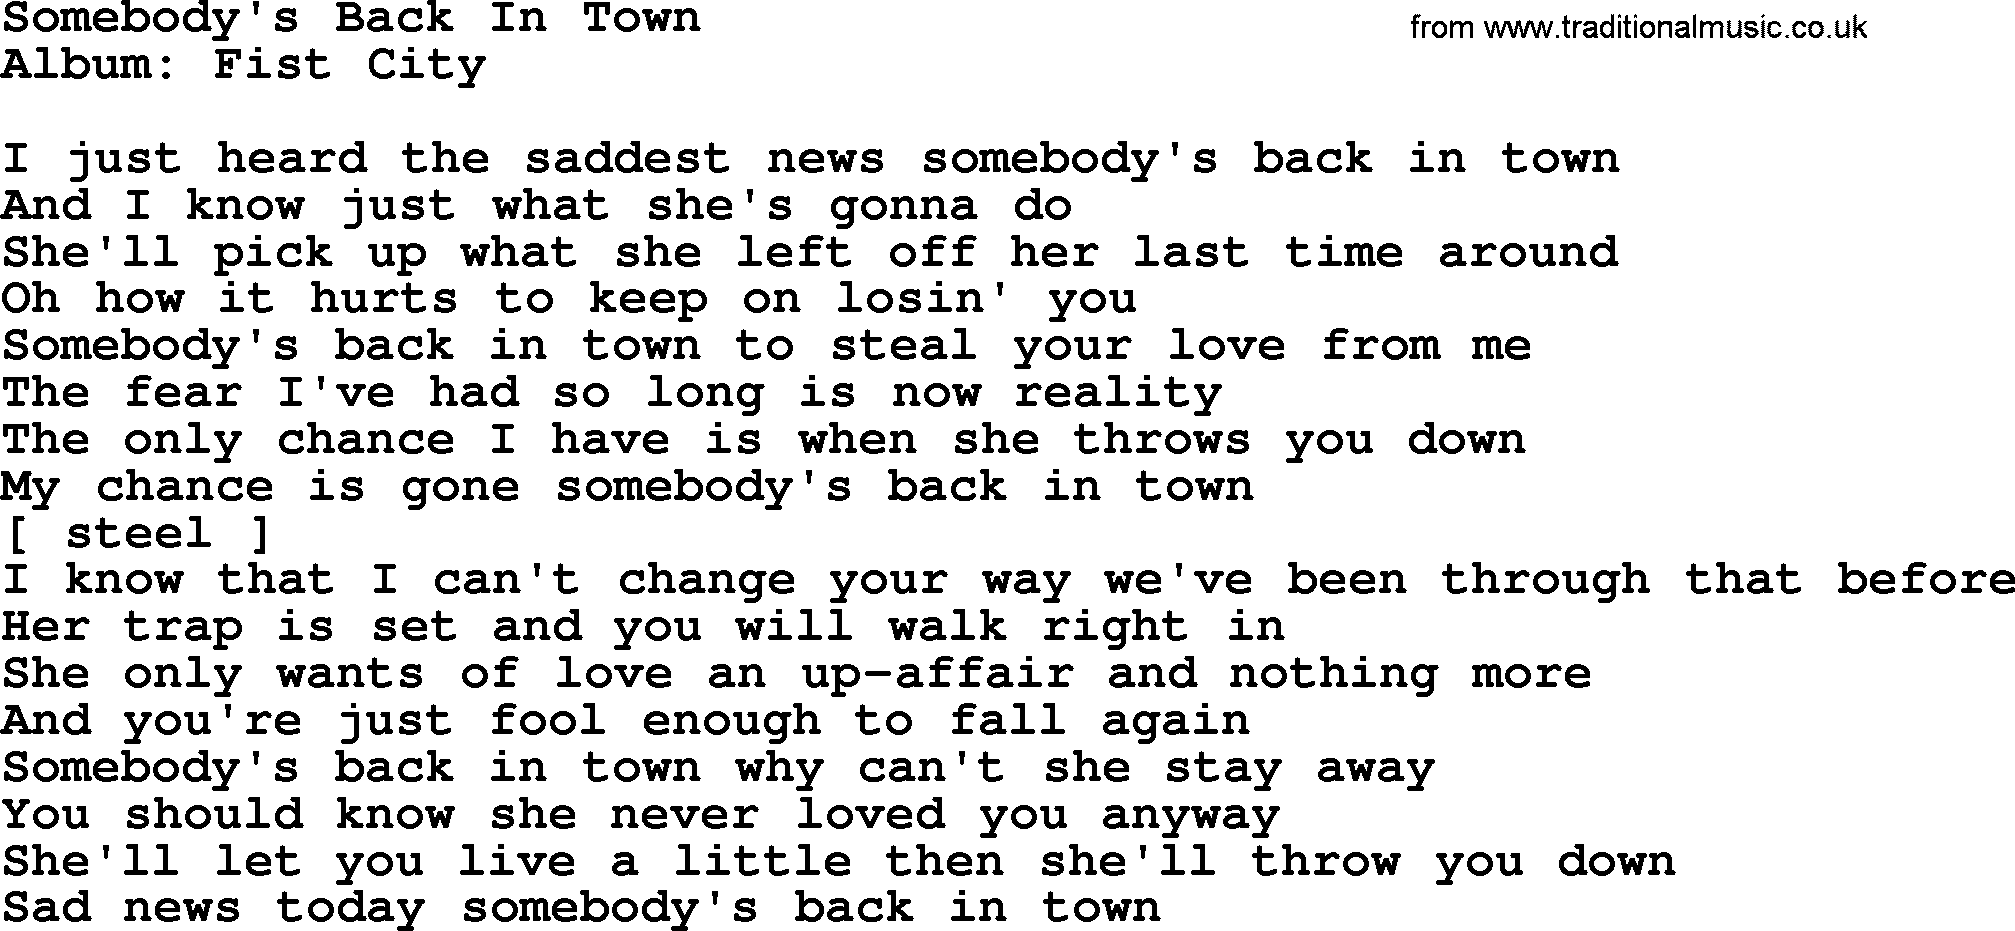 Loretta Lynn song: Somebody's Back In Town lyrics